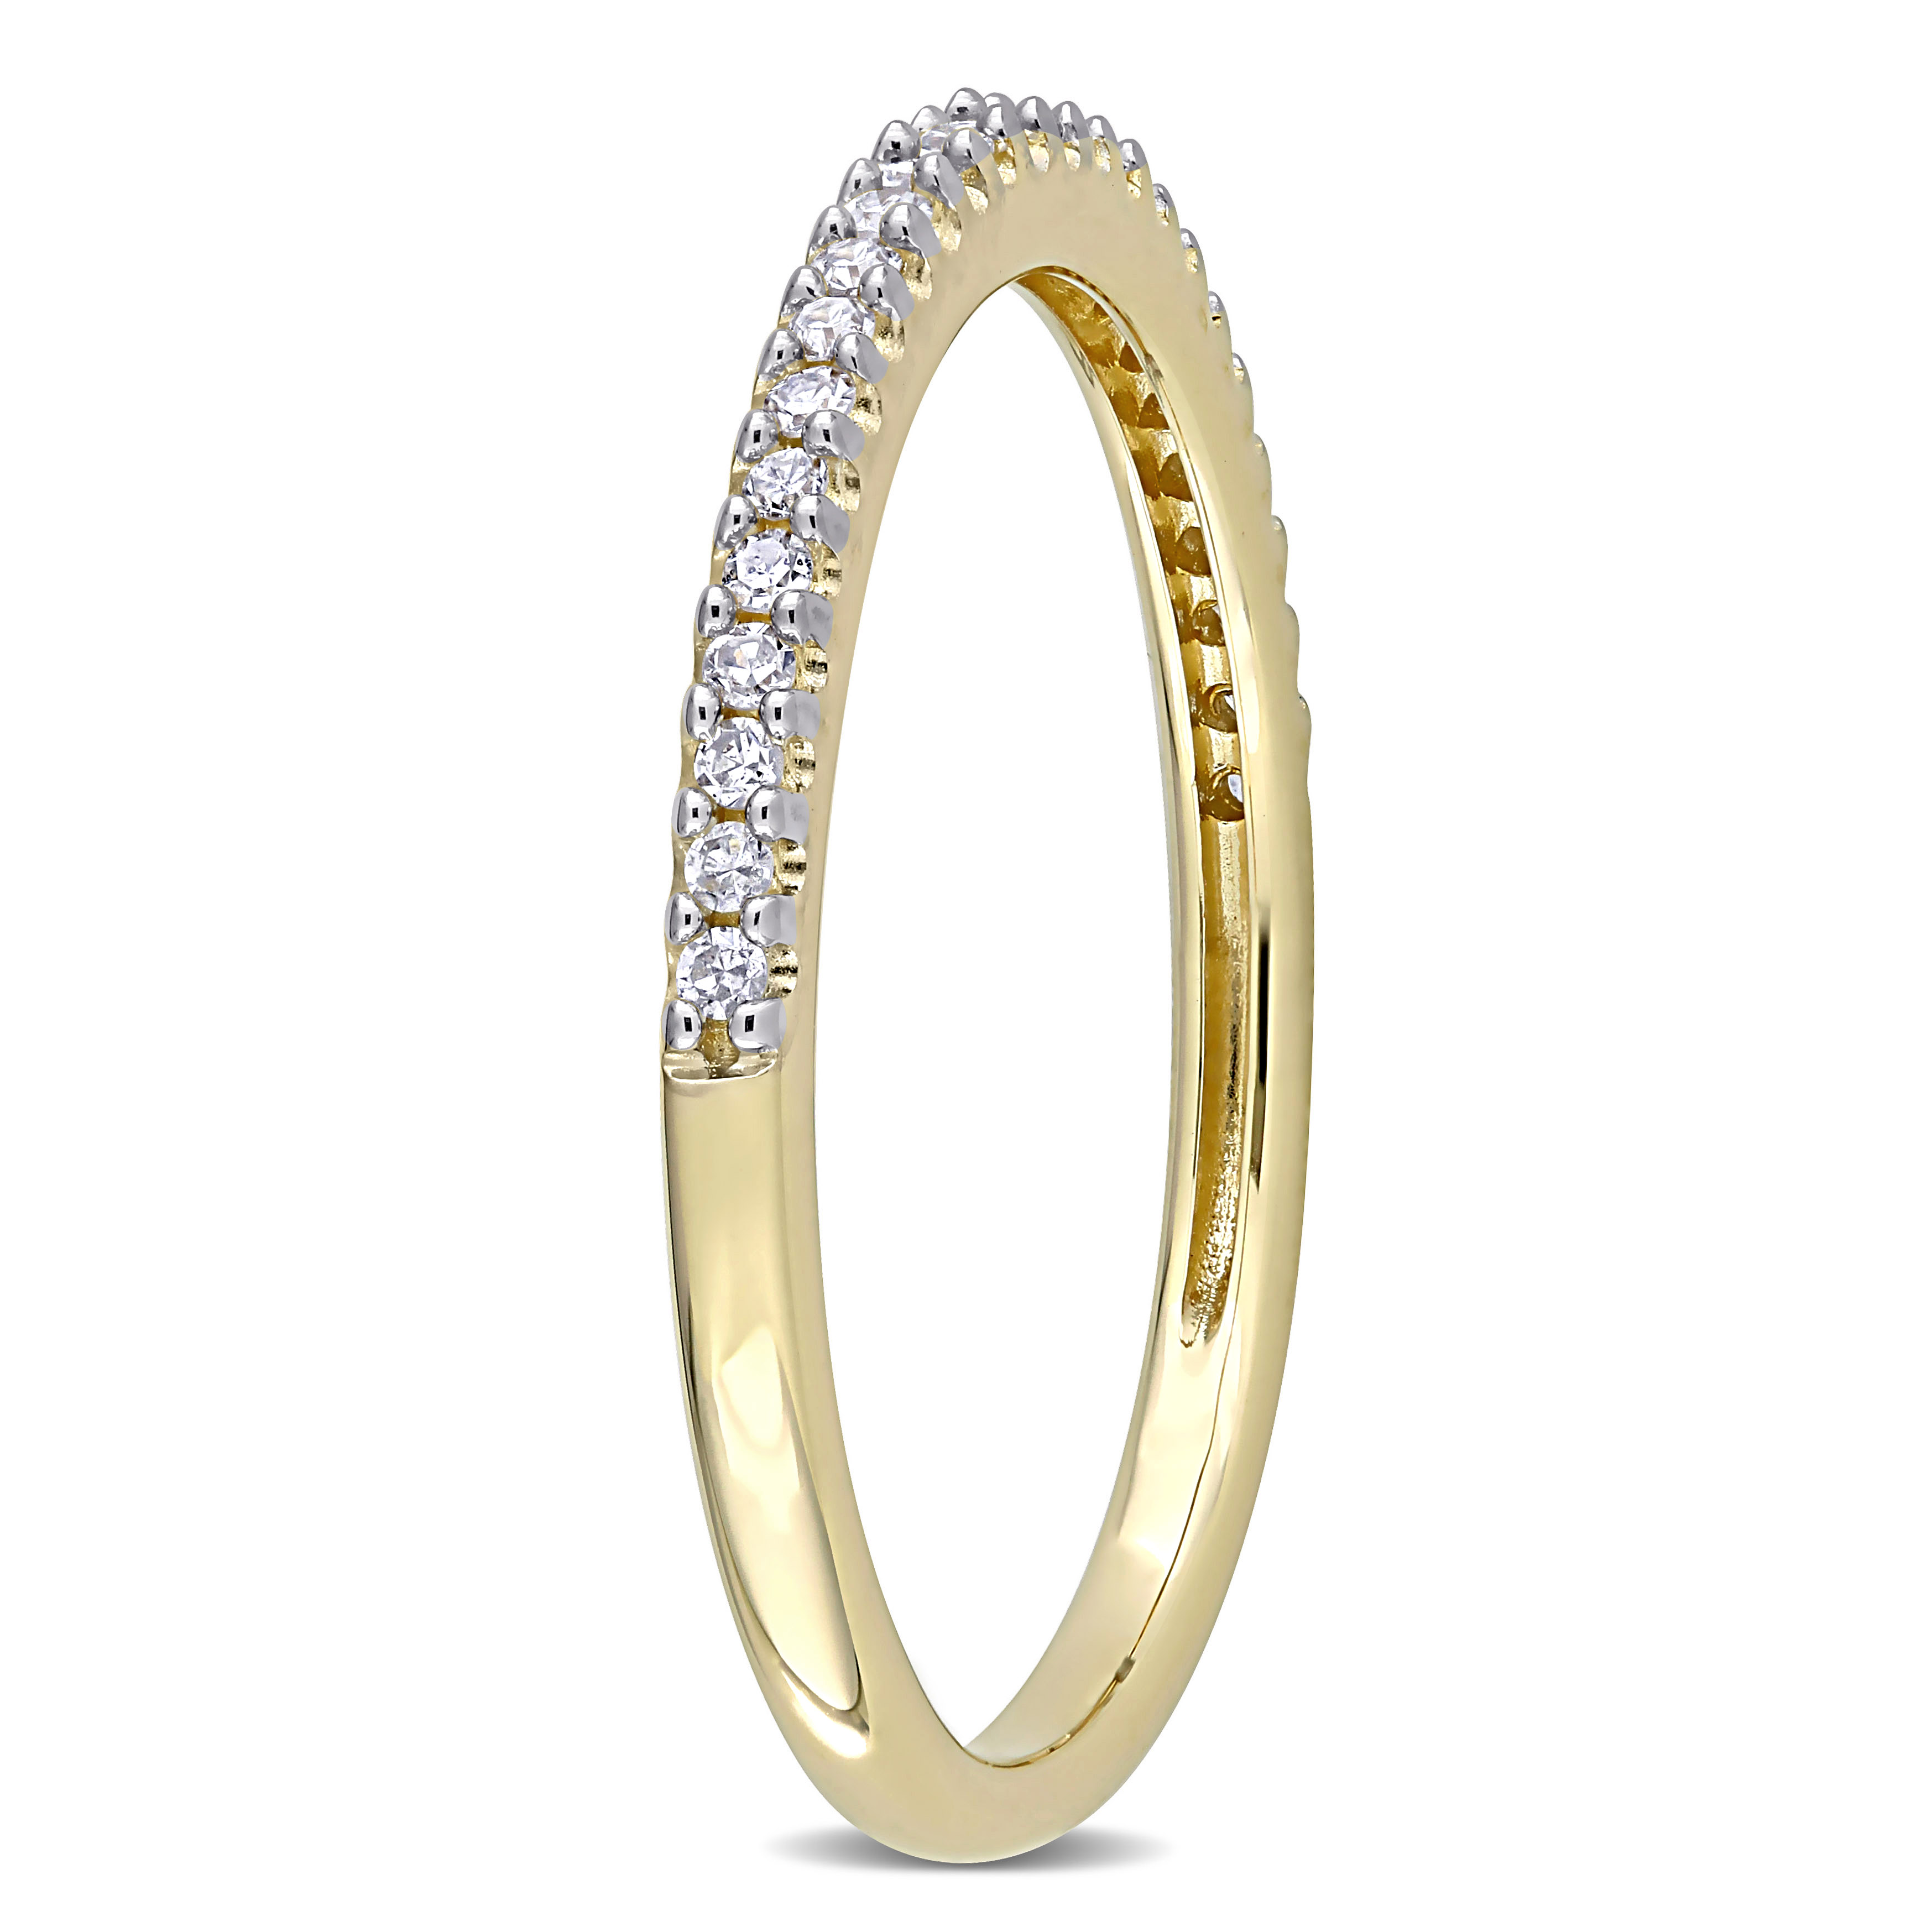 1/8 CT TW Diamond Semi-Eternity Ring in 14k Yellow Gold